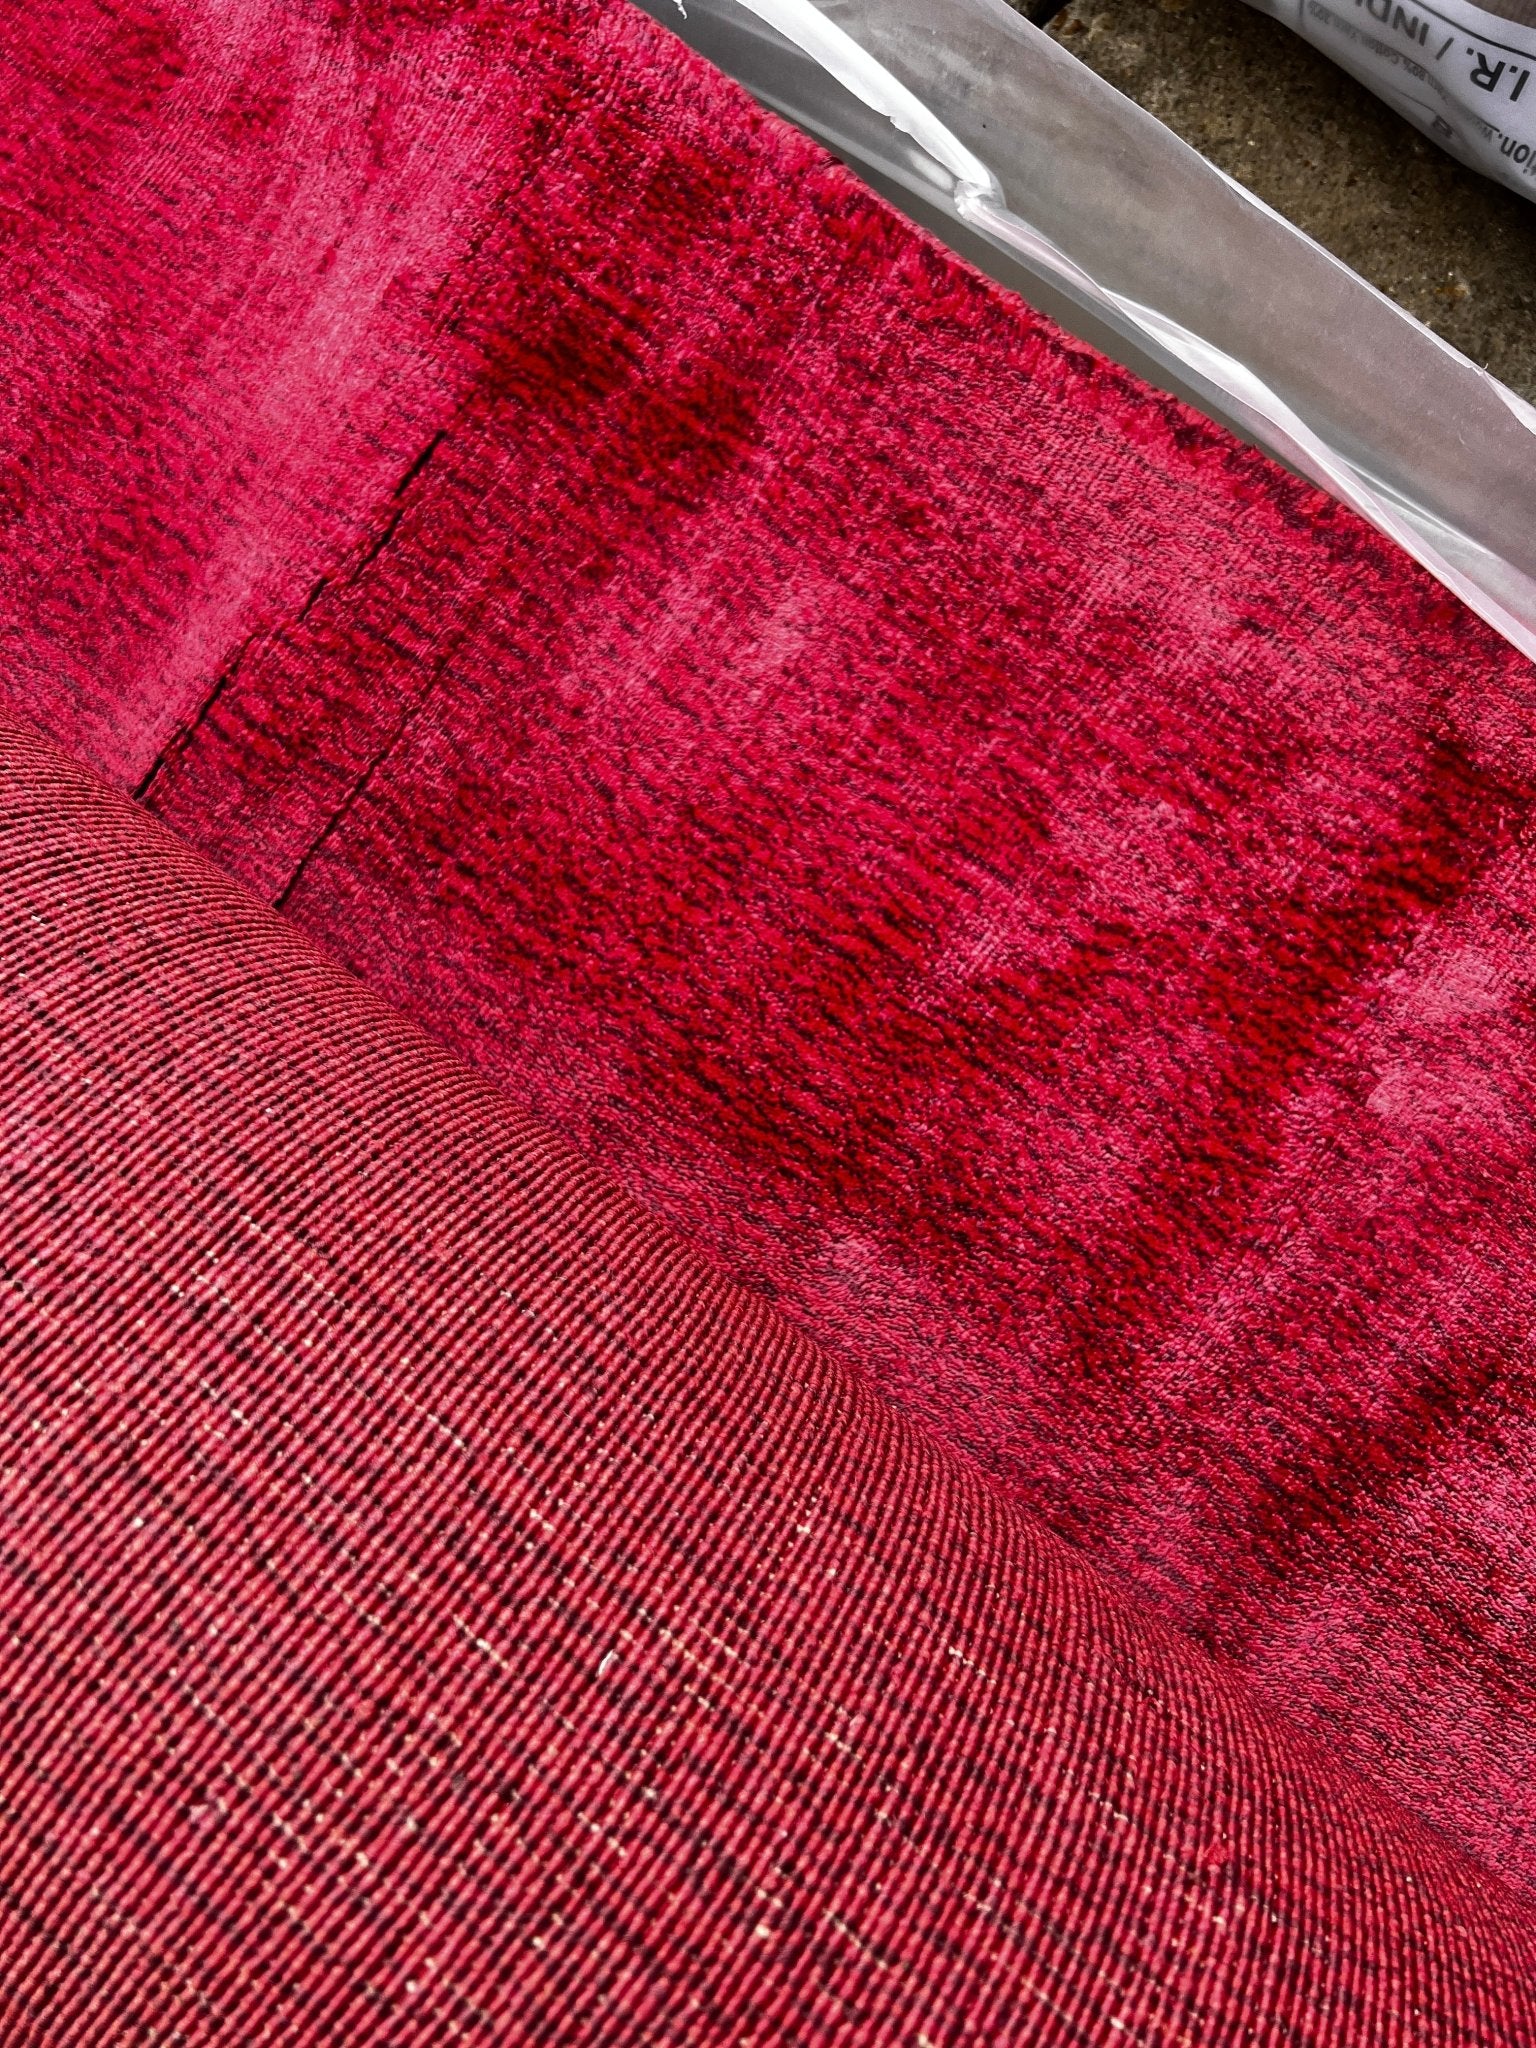 Rosana 11.3x13 Pink Textured Viscose | Banana Manor Rug Factory Outlet